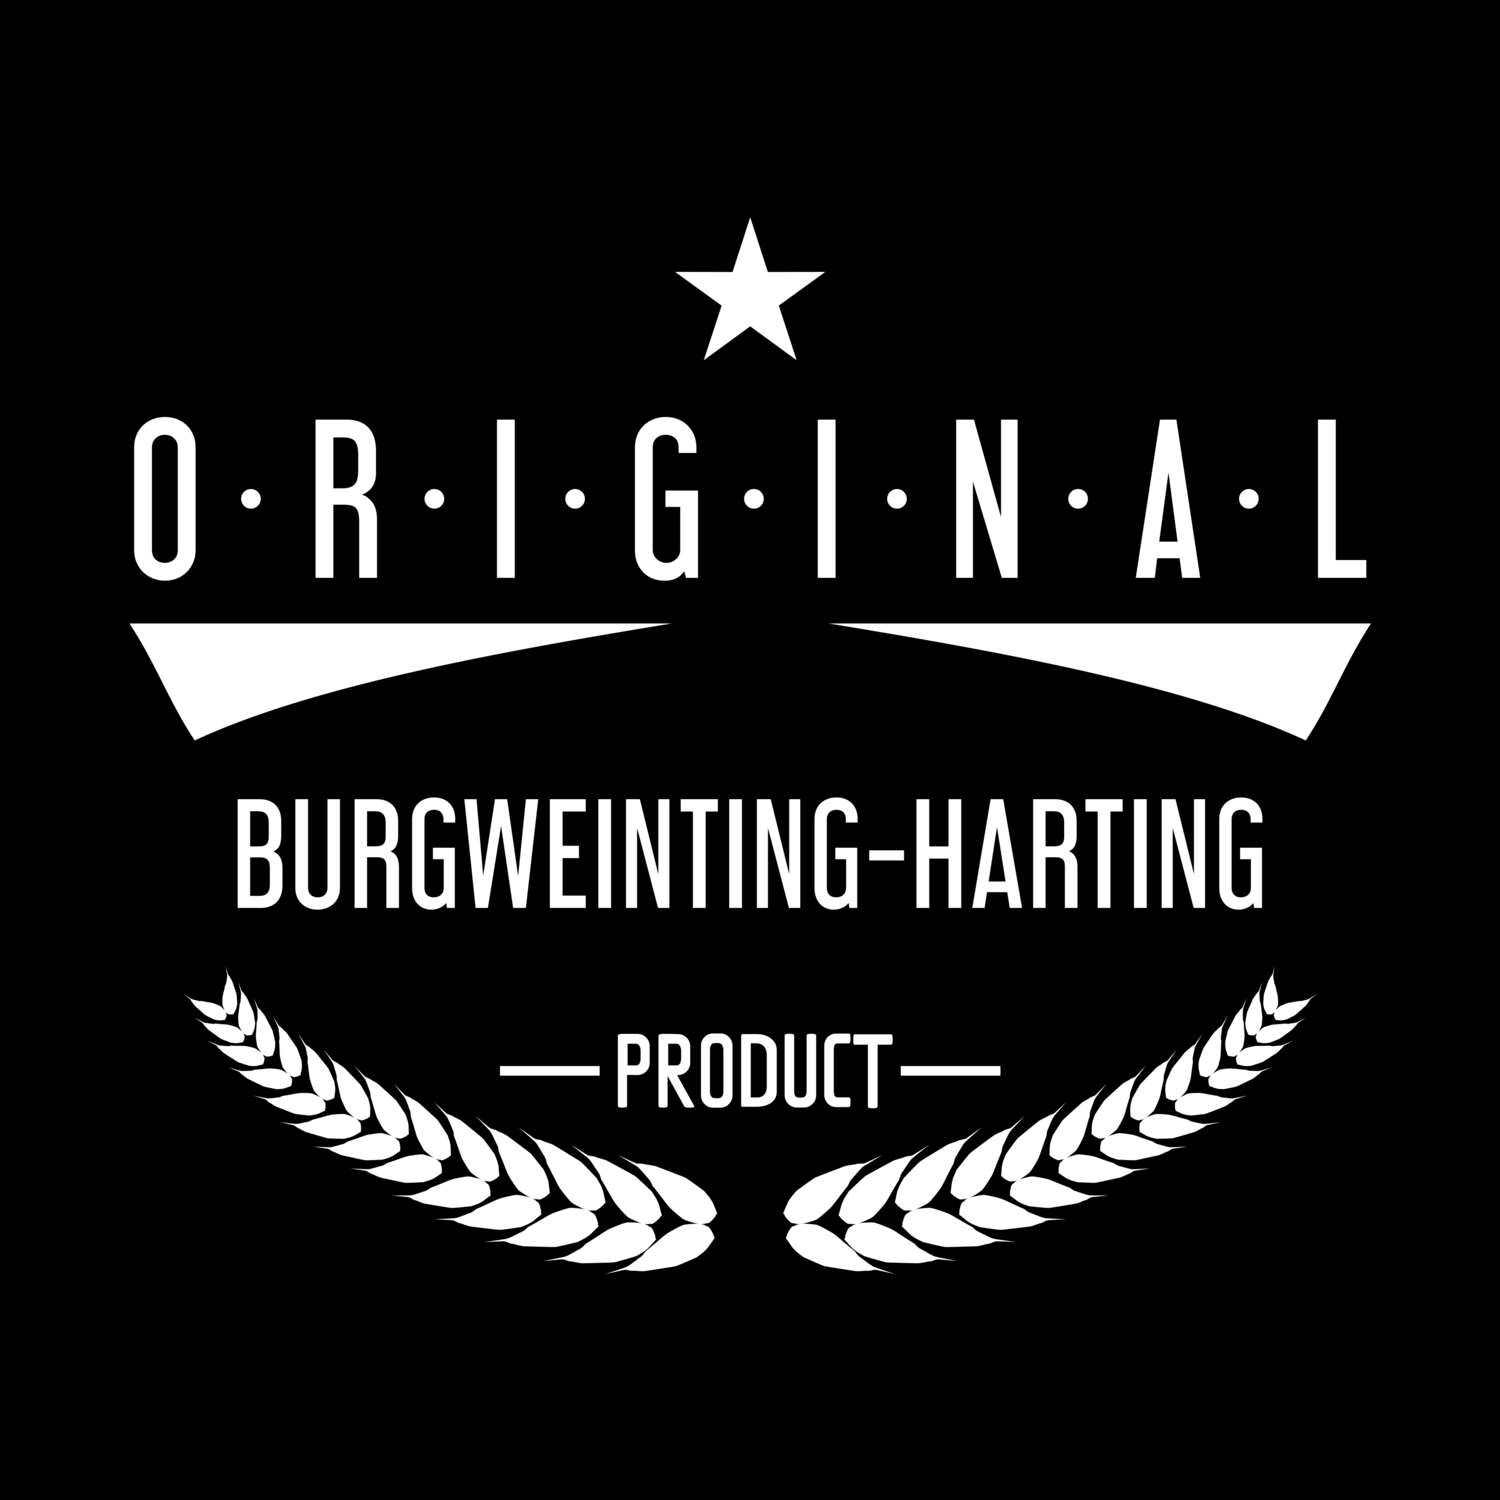 Burgweinting-Harting T-Shirt »Original Product«